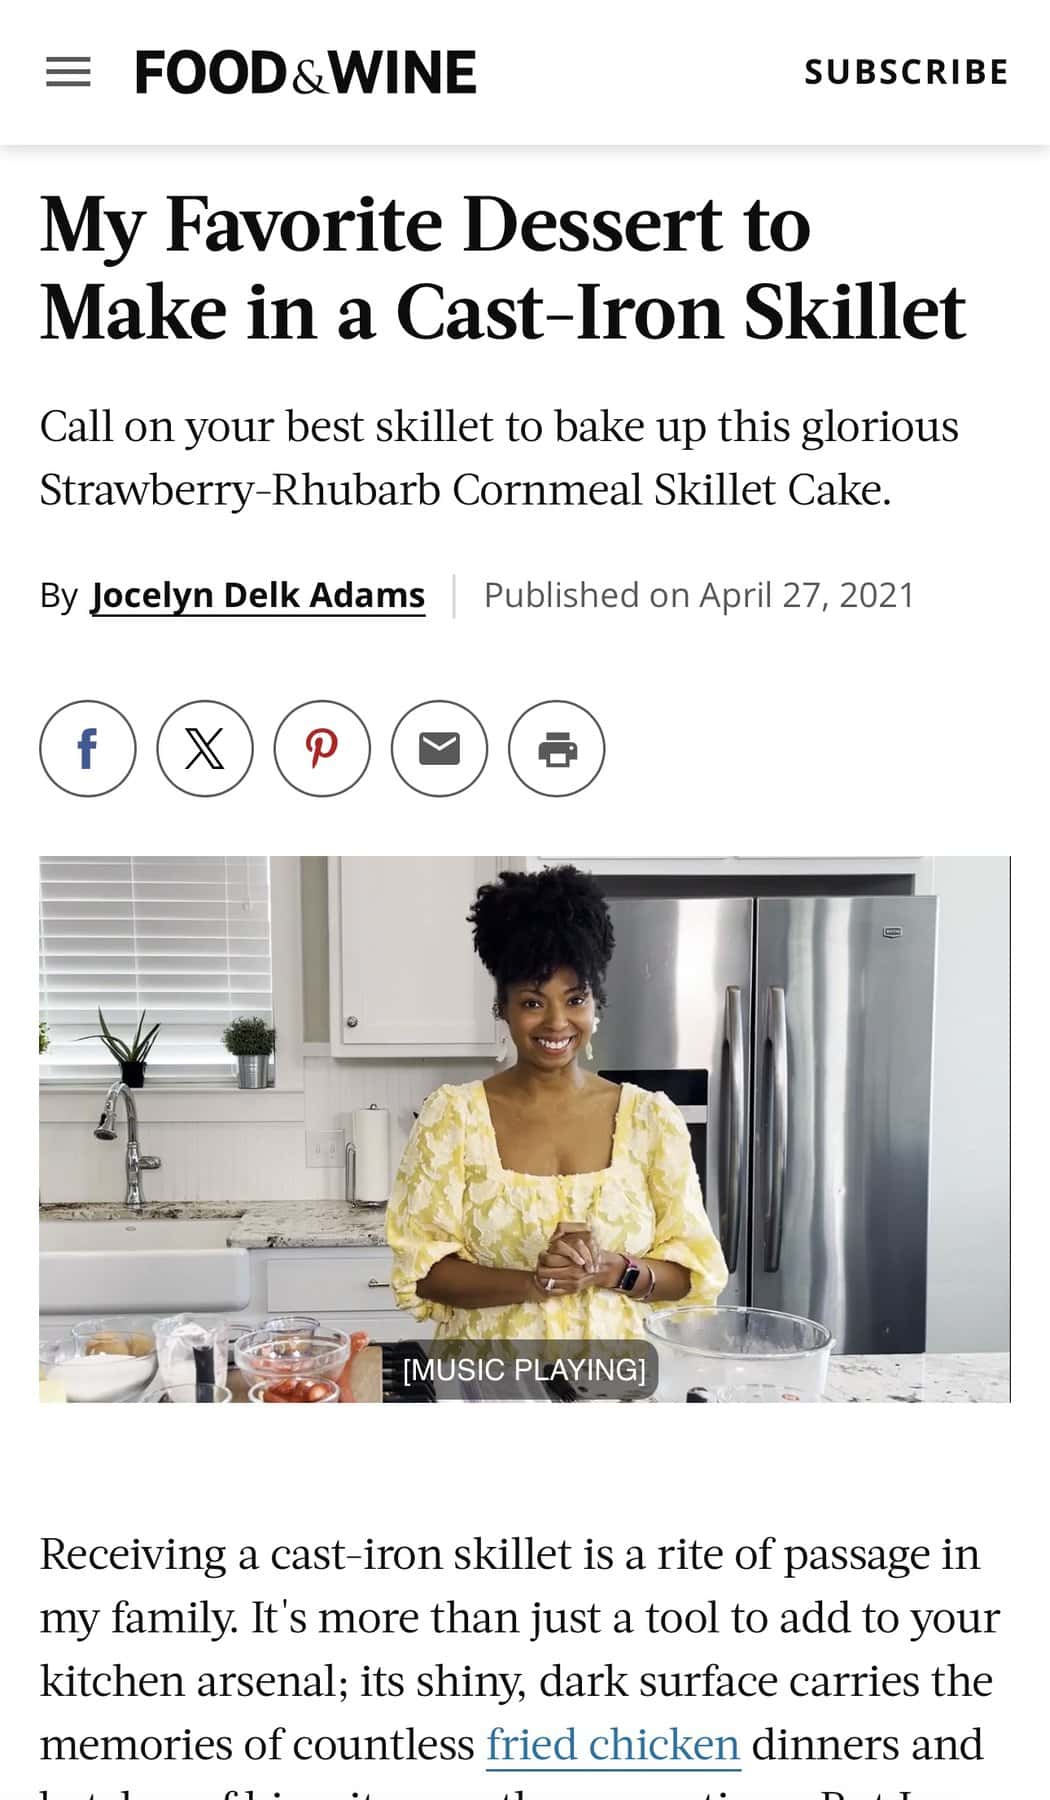 Jocelyn Delk Adams teaching favorite dessert in a cast iron skillet for food and wine magazine